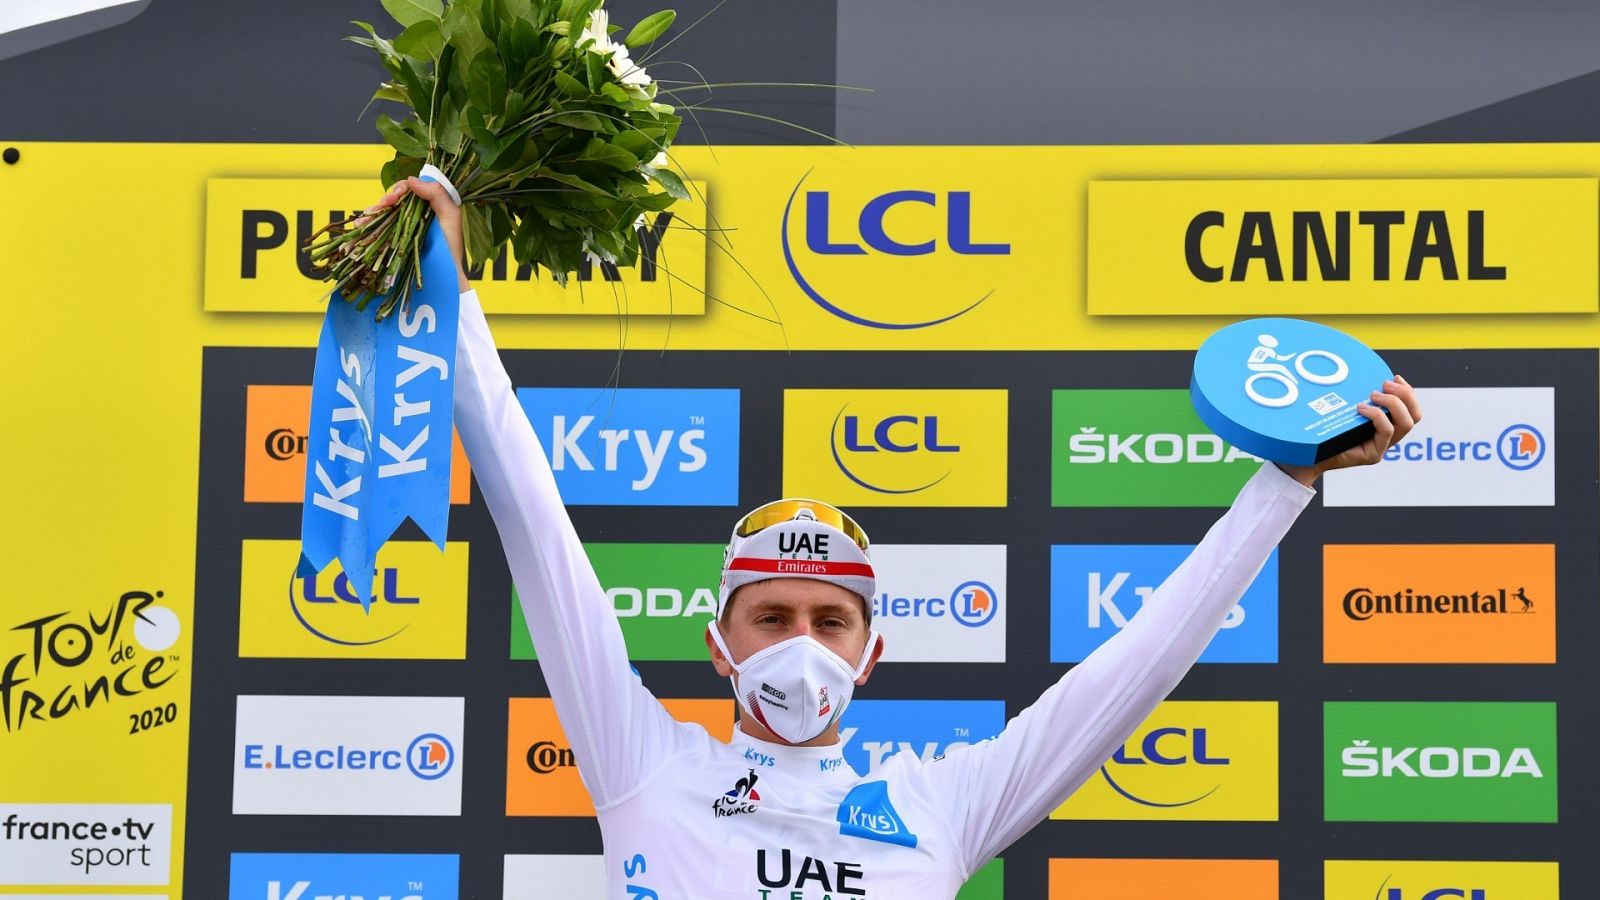  Tadej Pogaçar celebra el jersey blanco conseguido en la etapa 13 del Tour de Francia 2020